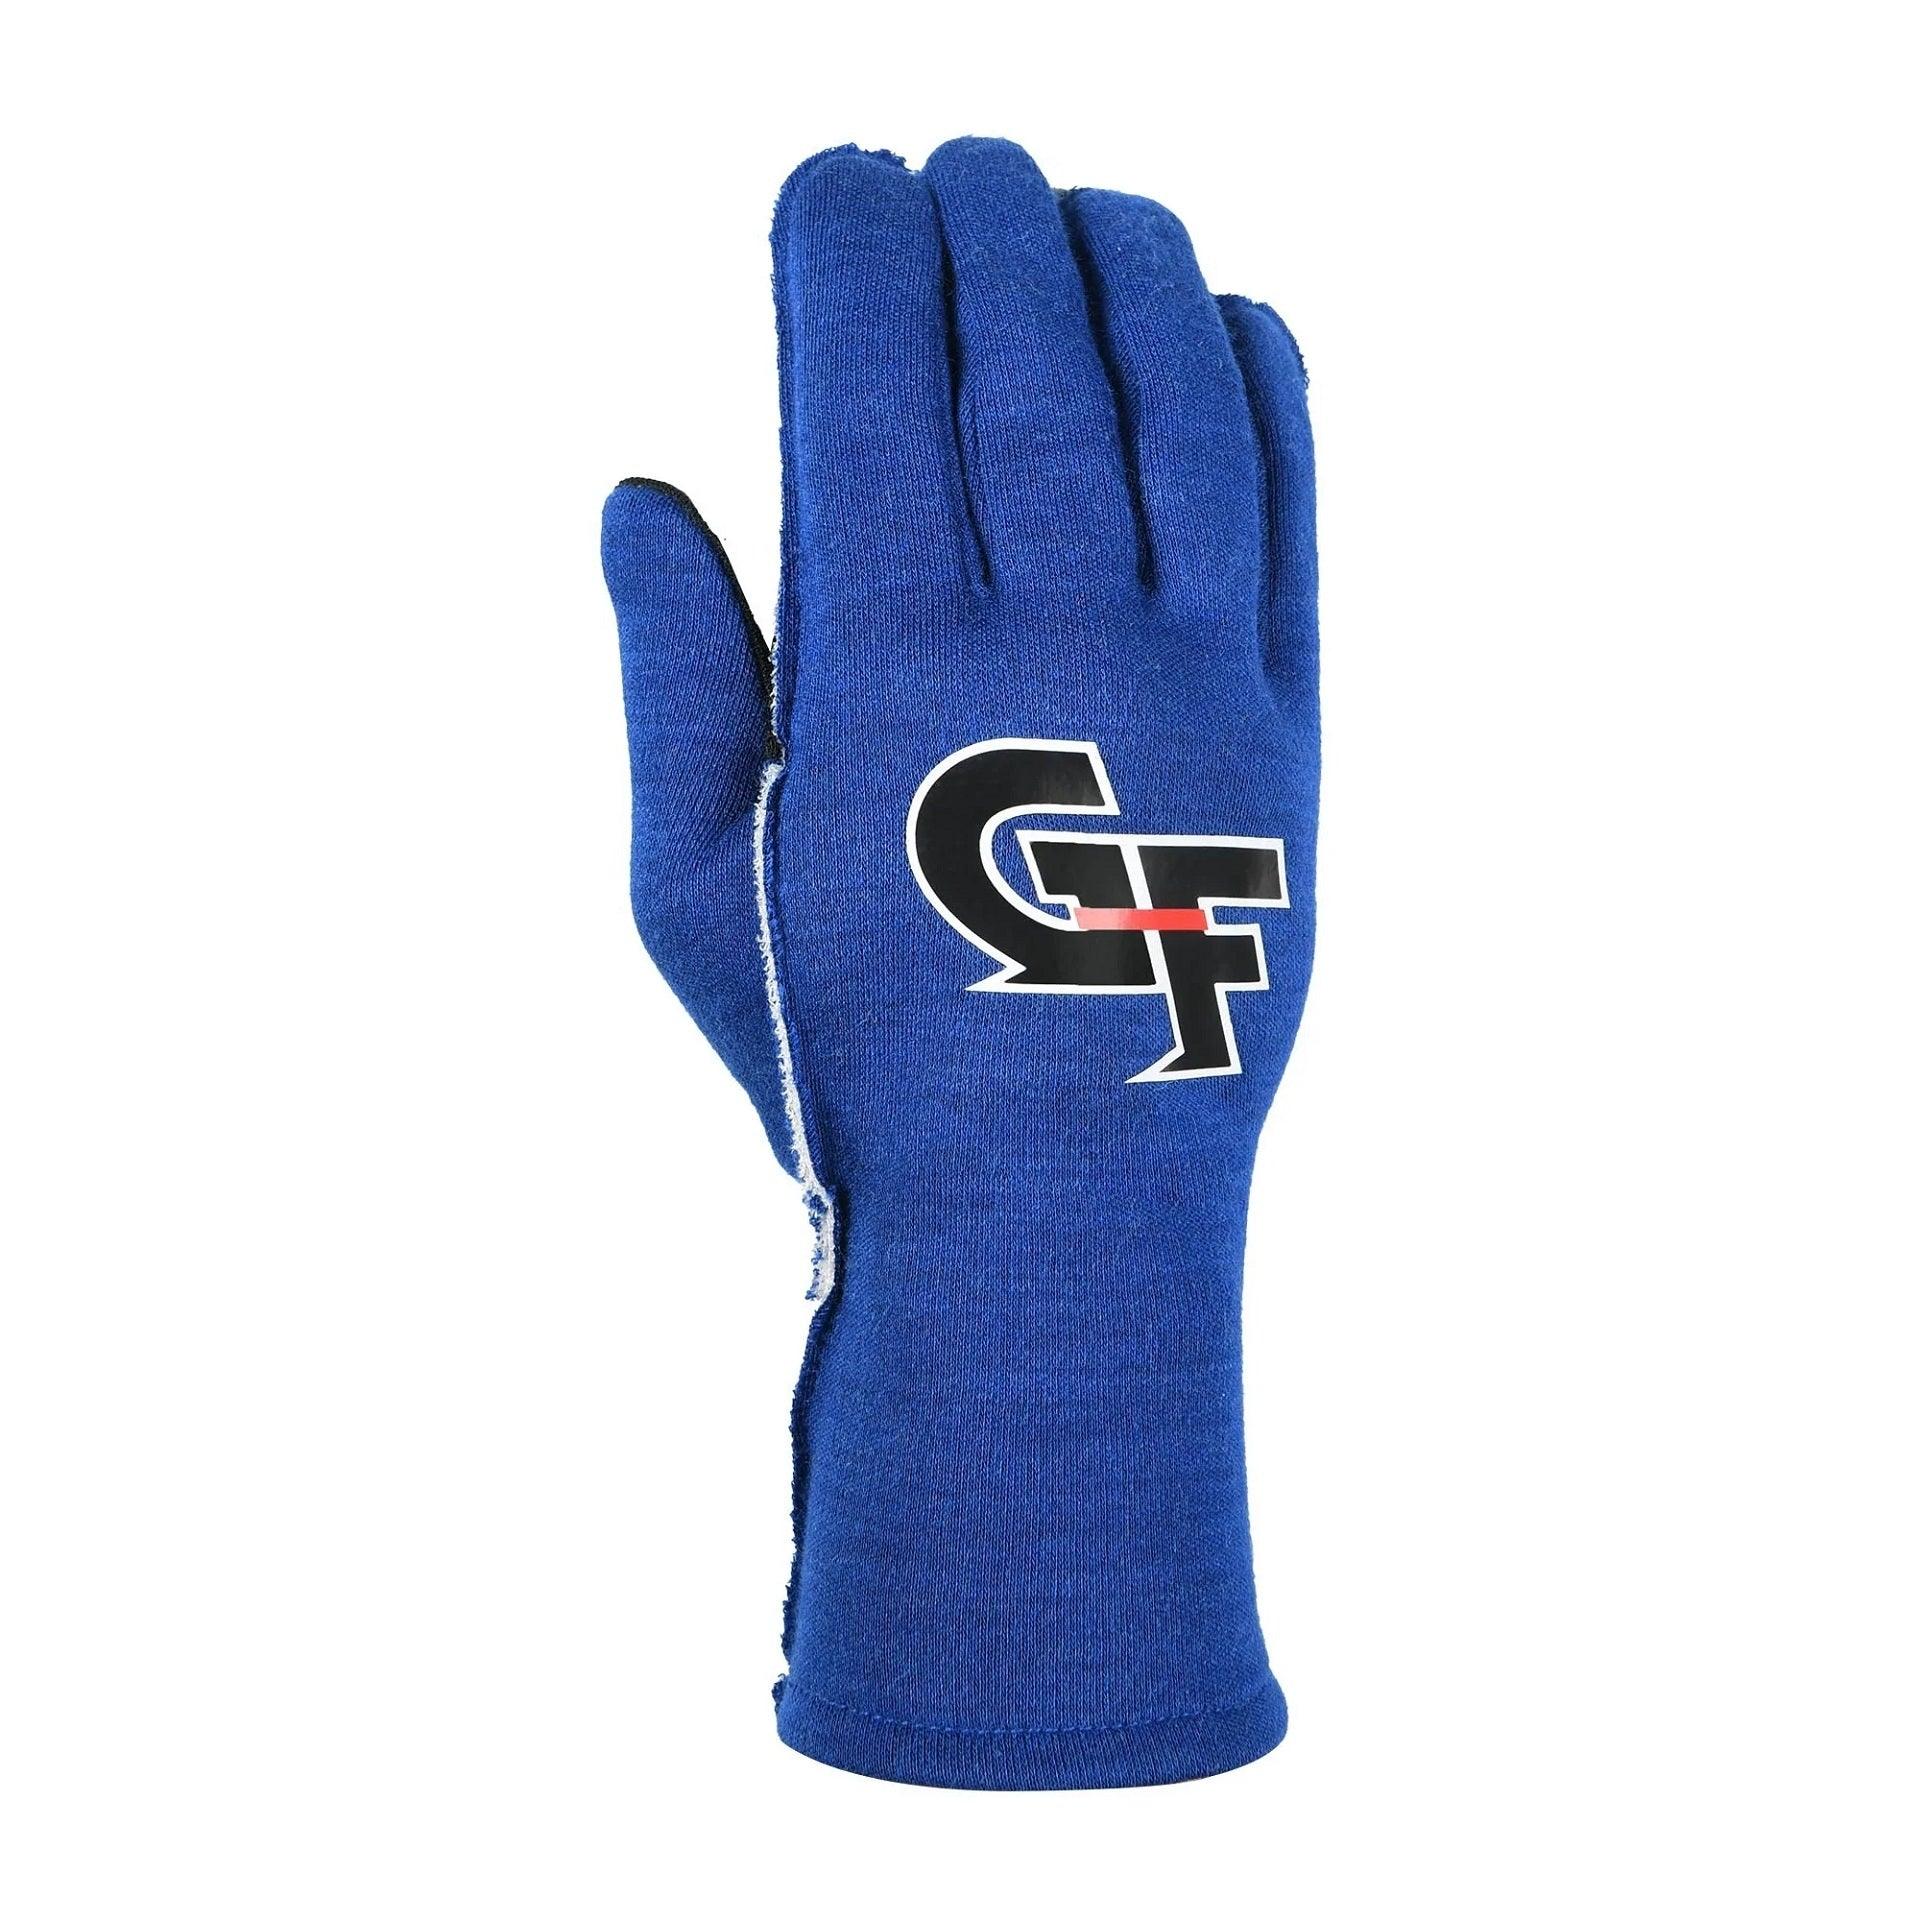 Gloves G-Limit XX-Large Blue - Burlile Performance Products